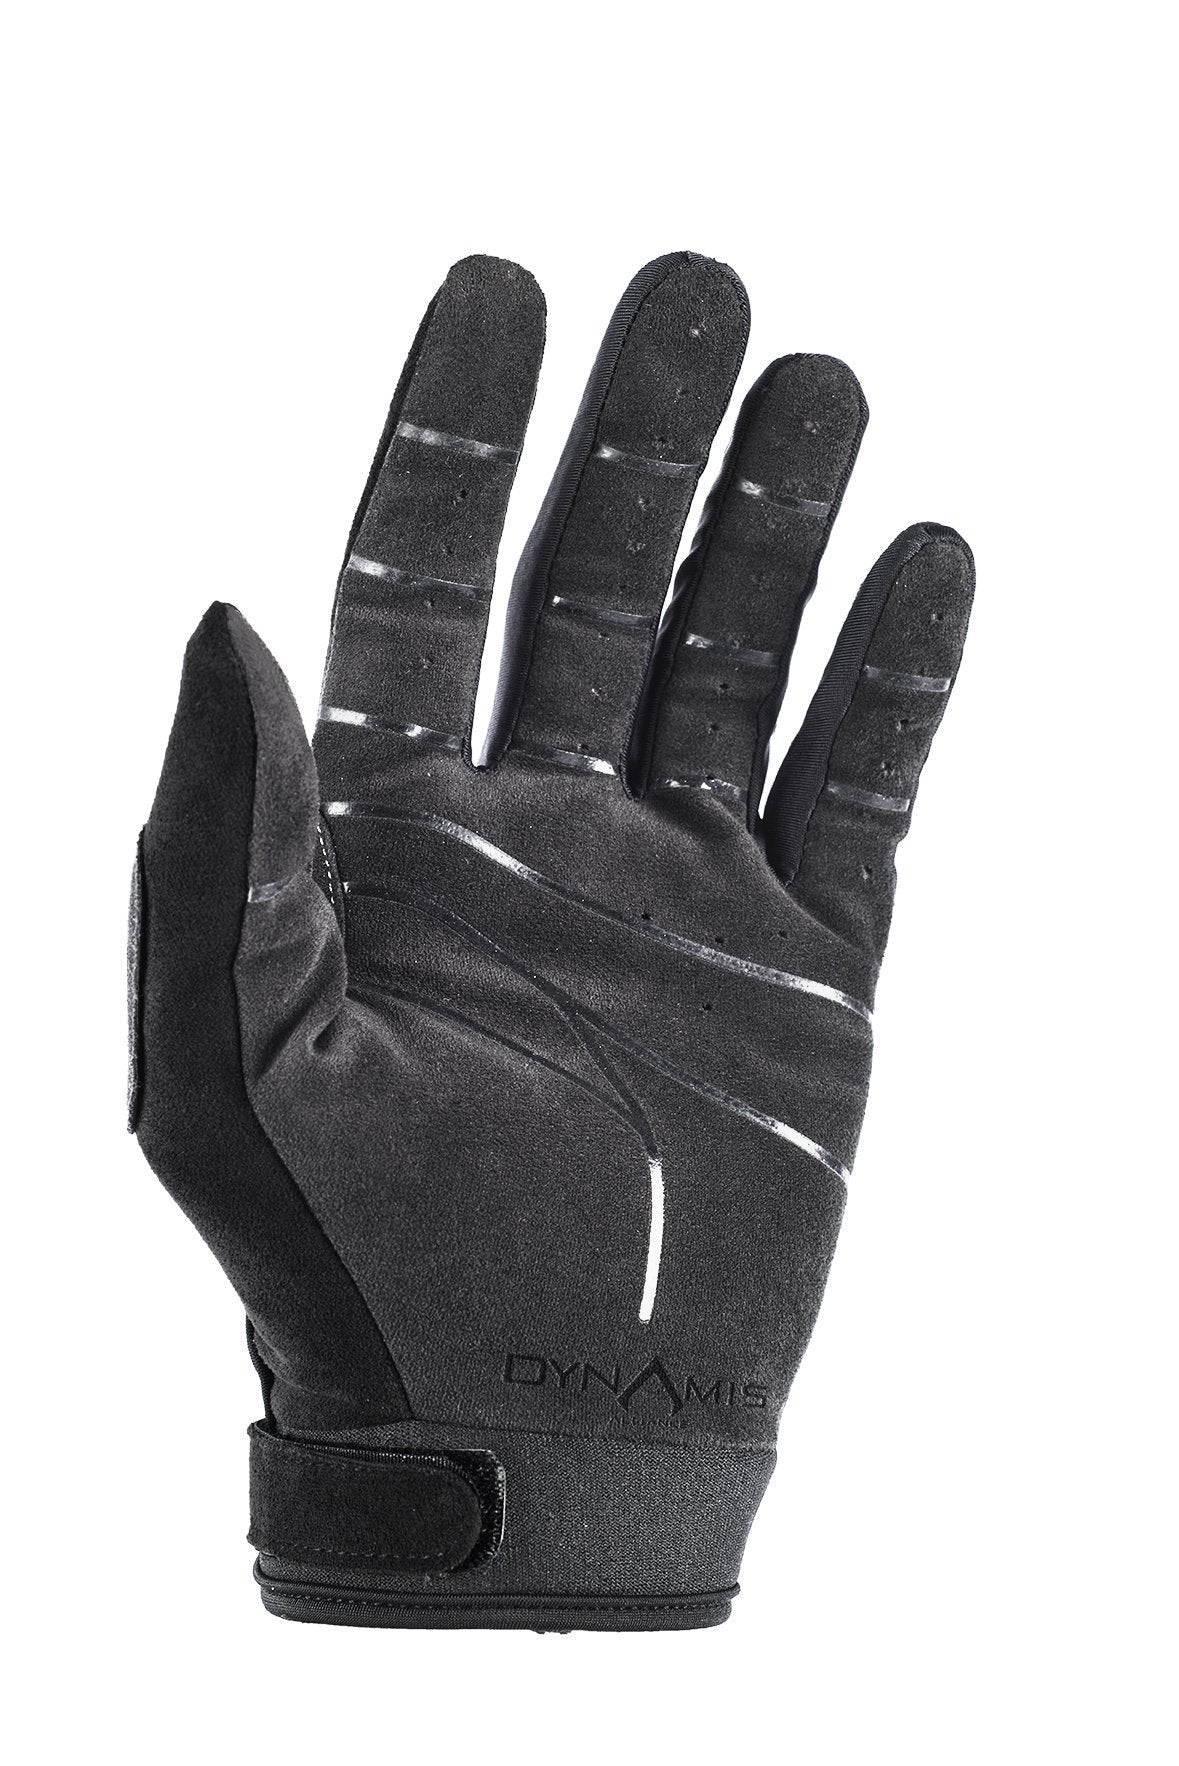 Line of Fire Gauntlet Precision Glove Gloves Line of Fire Tactical Tactical Gear Supplier Tactical Distributors Australia